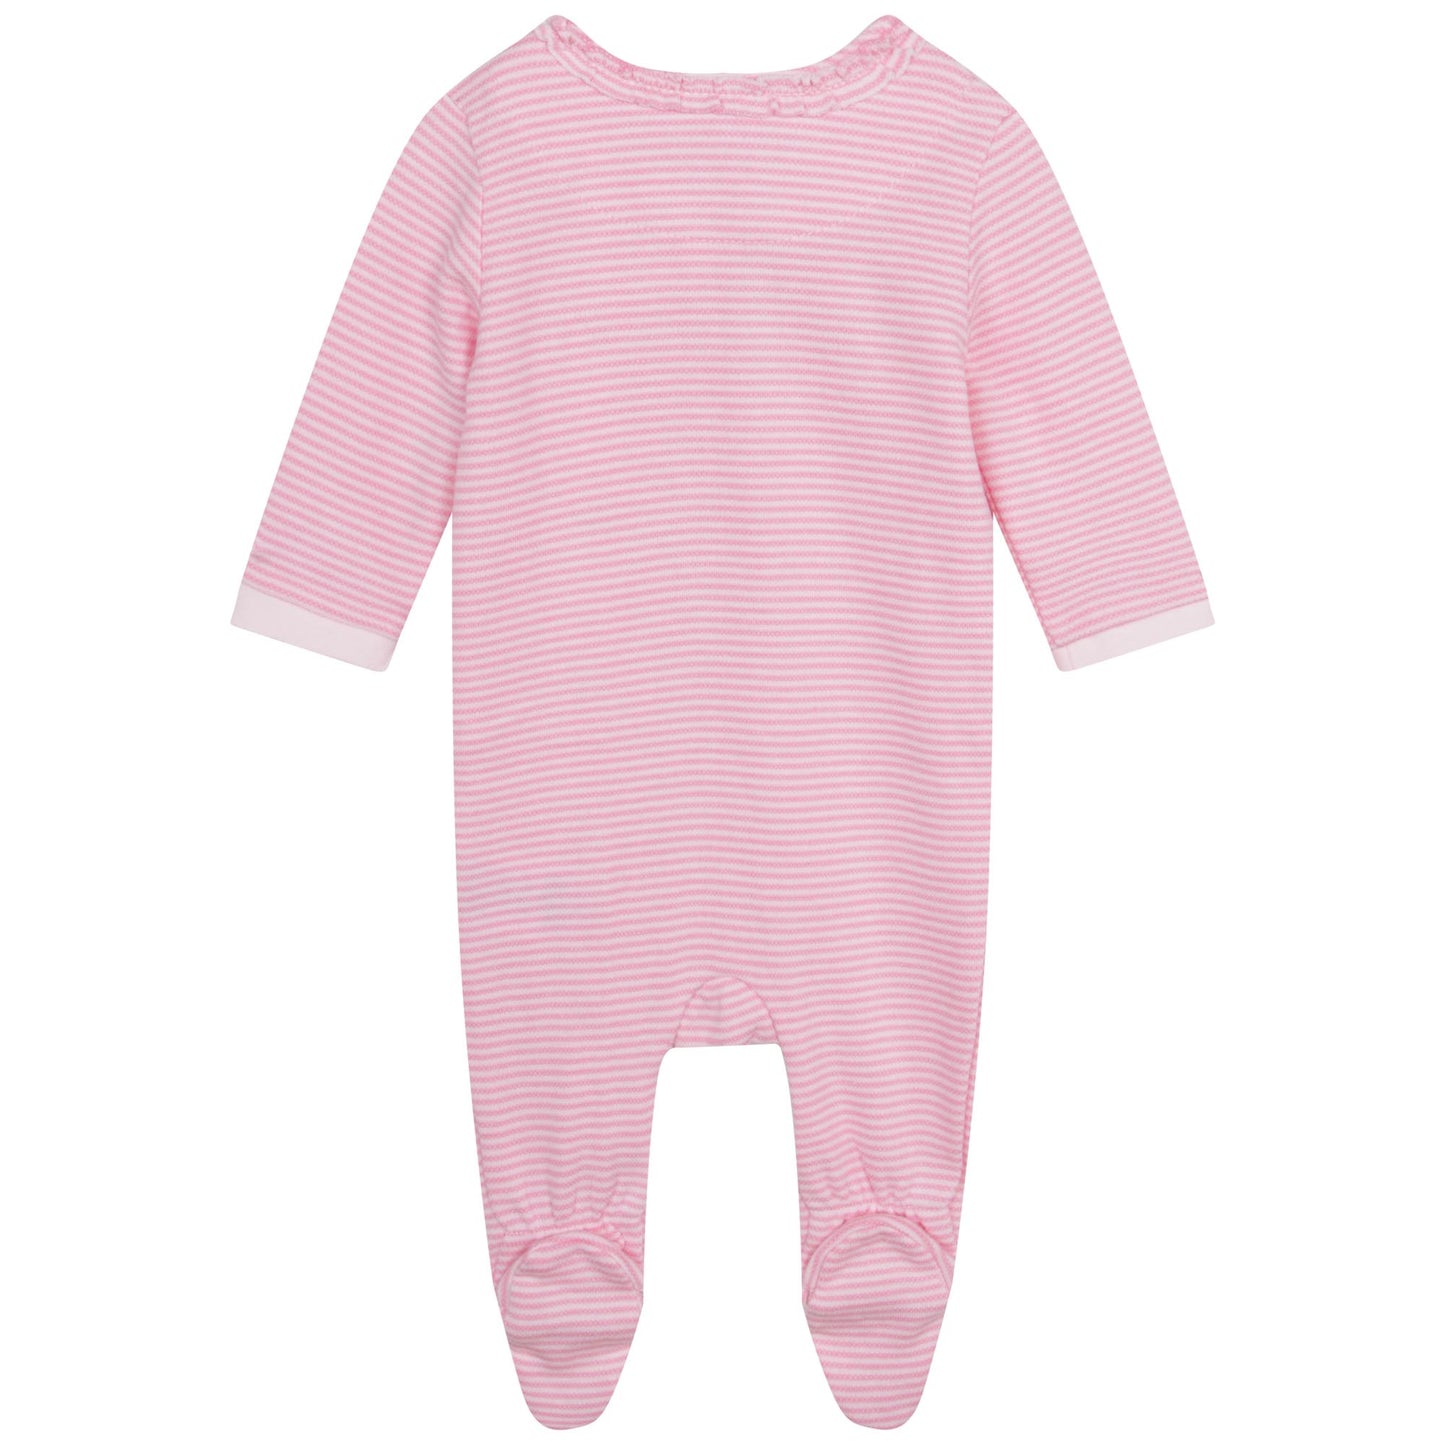 BOSS Baby Girls Pink Logo Pyjamas